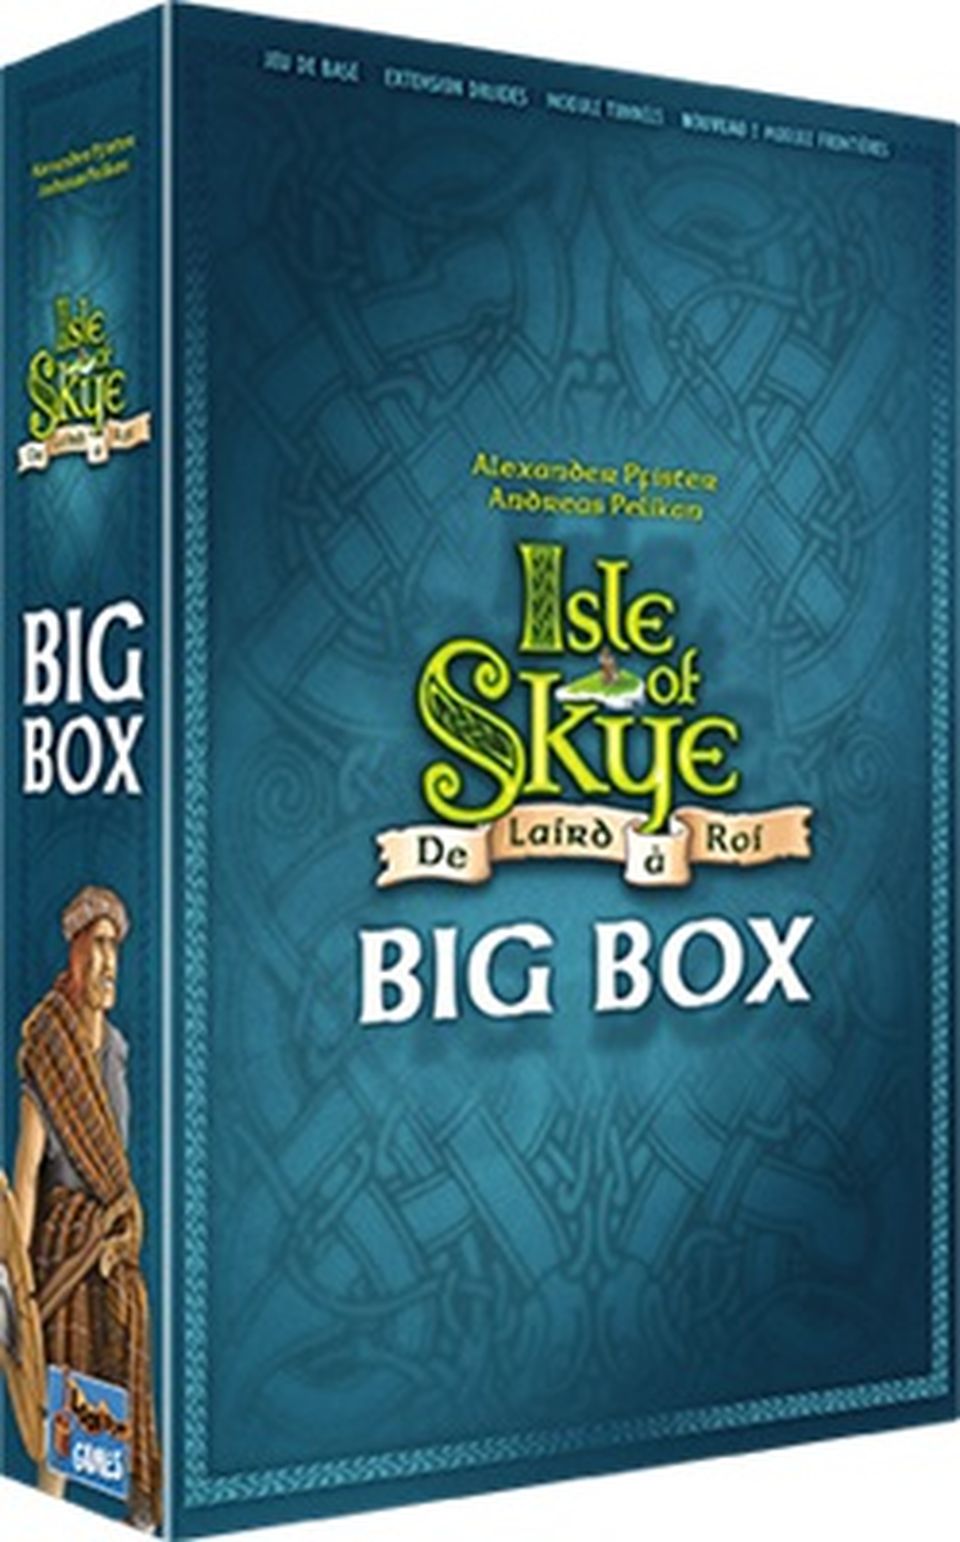 Isle of Skye Big Box image